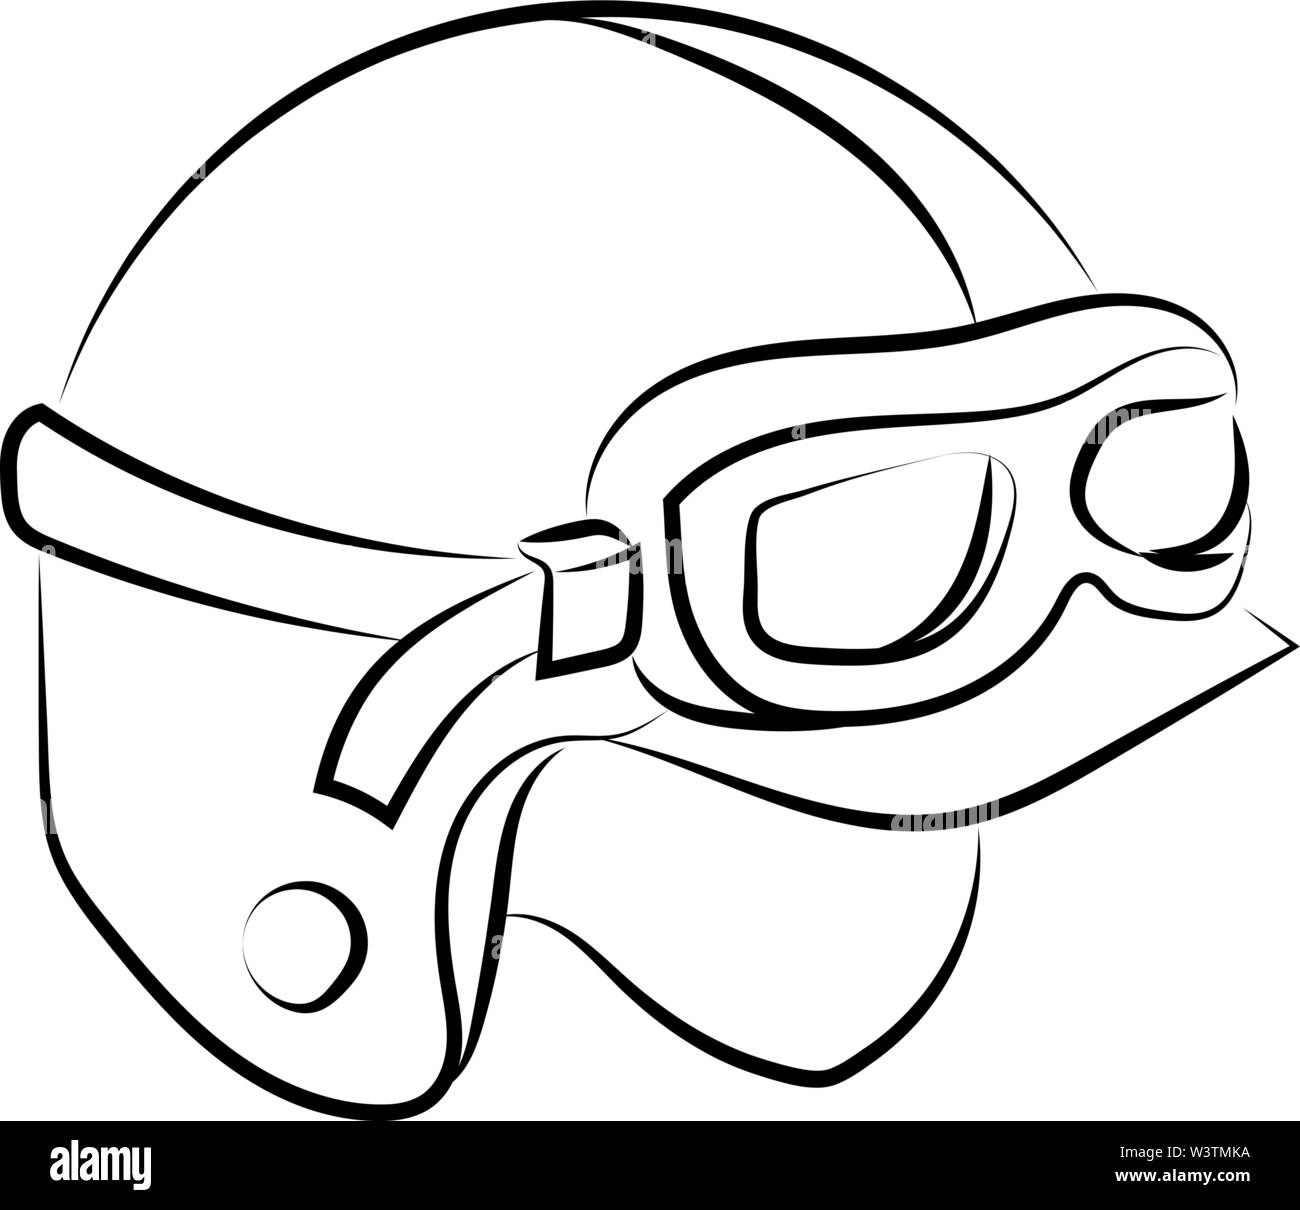 Motorrad Helm Skizze, Illustration, Vektor auf weißem Hintergrund. Stock Vektor